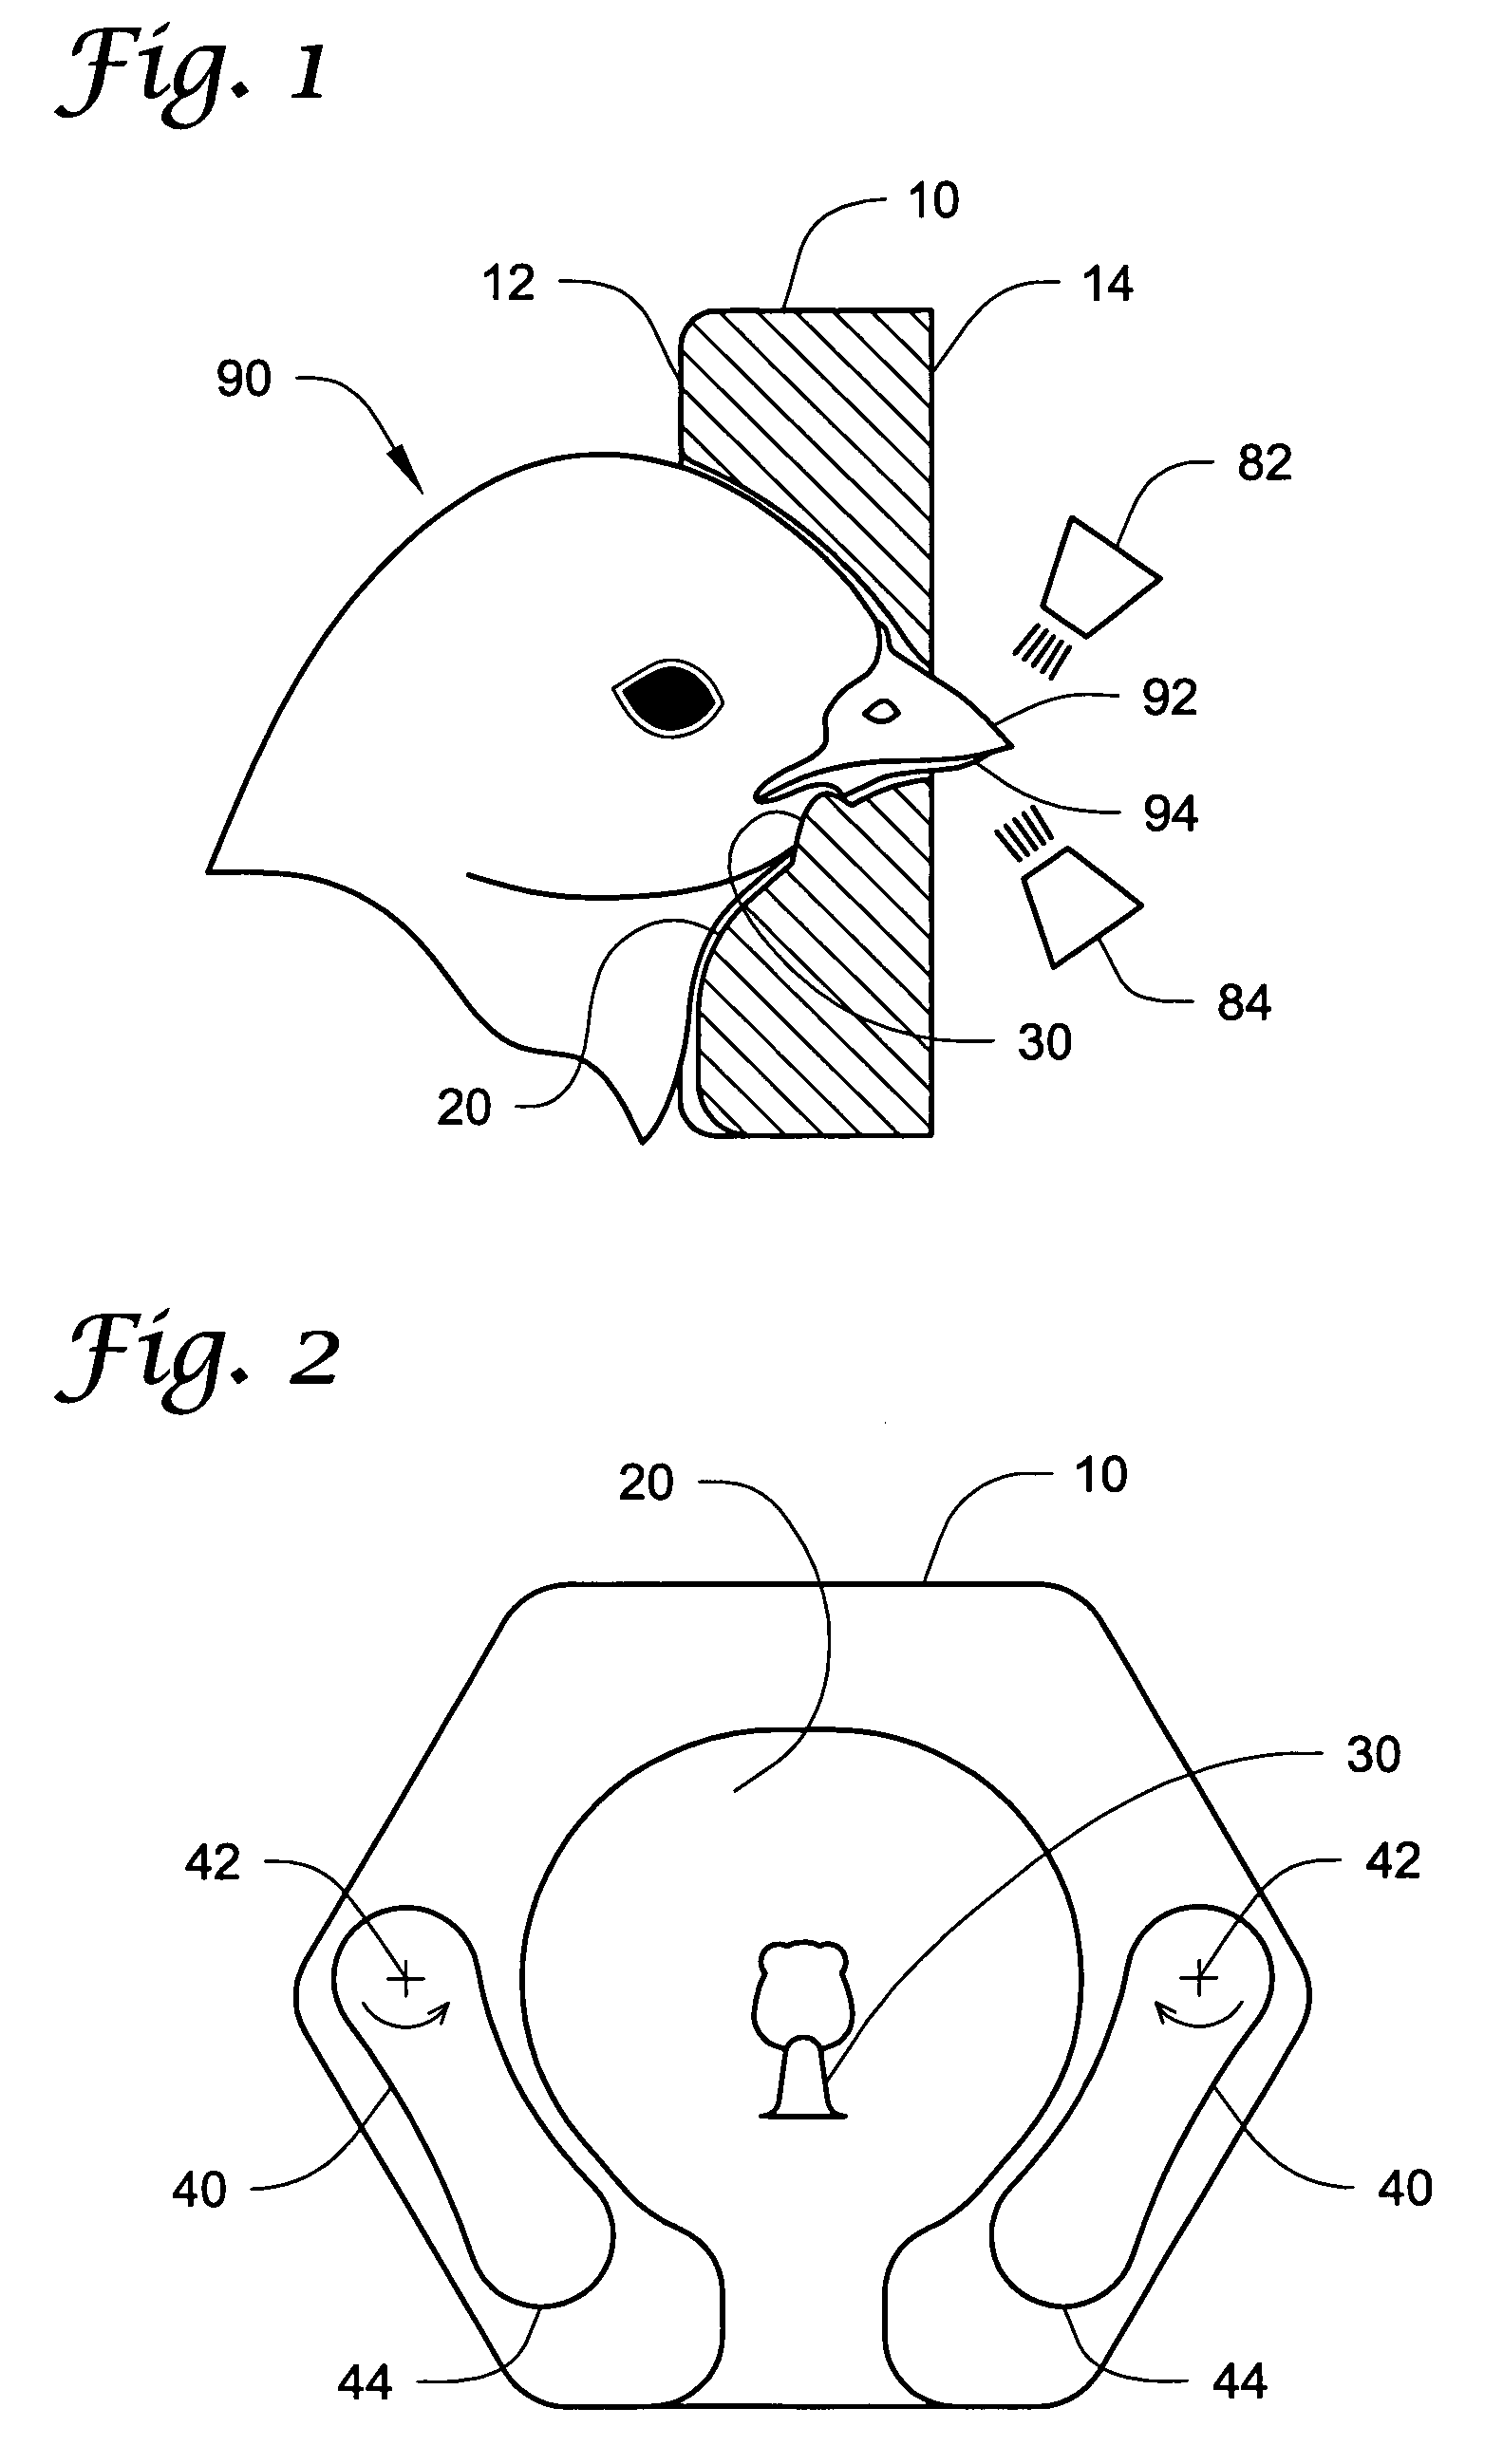 Beak treatment with tongue protection